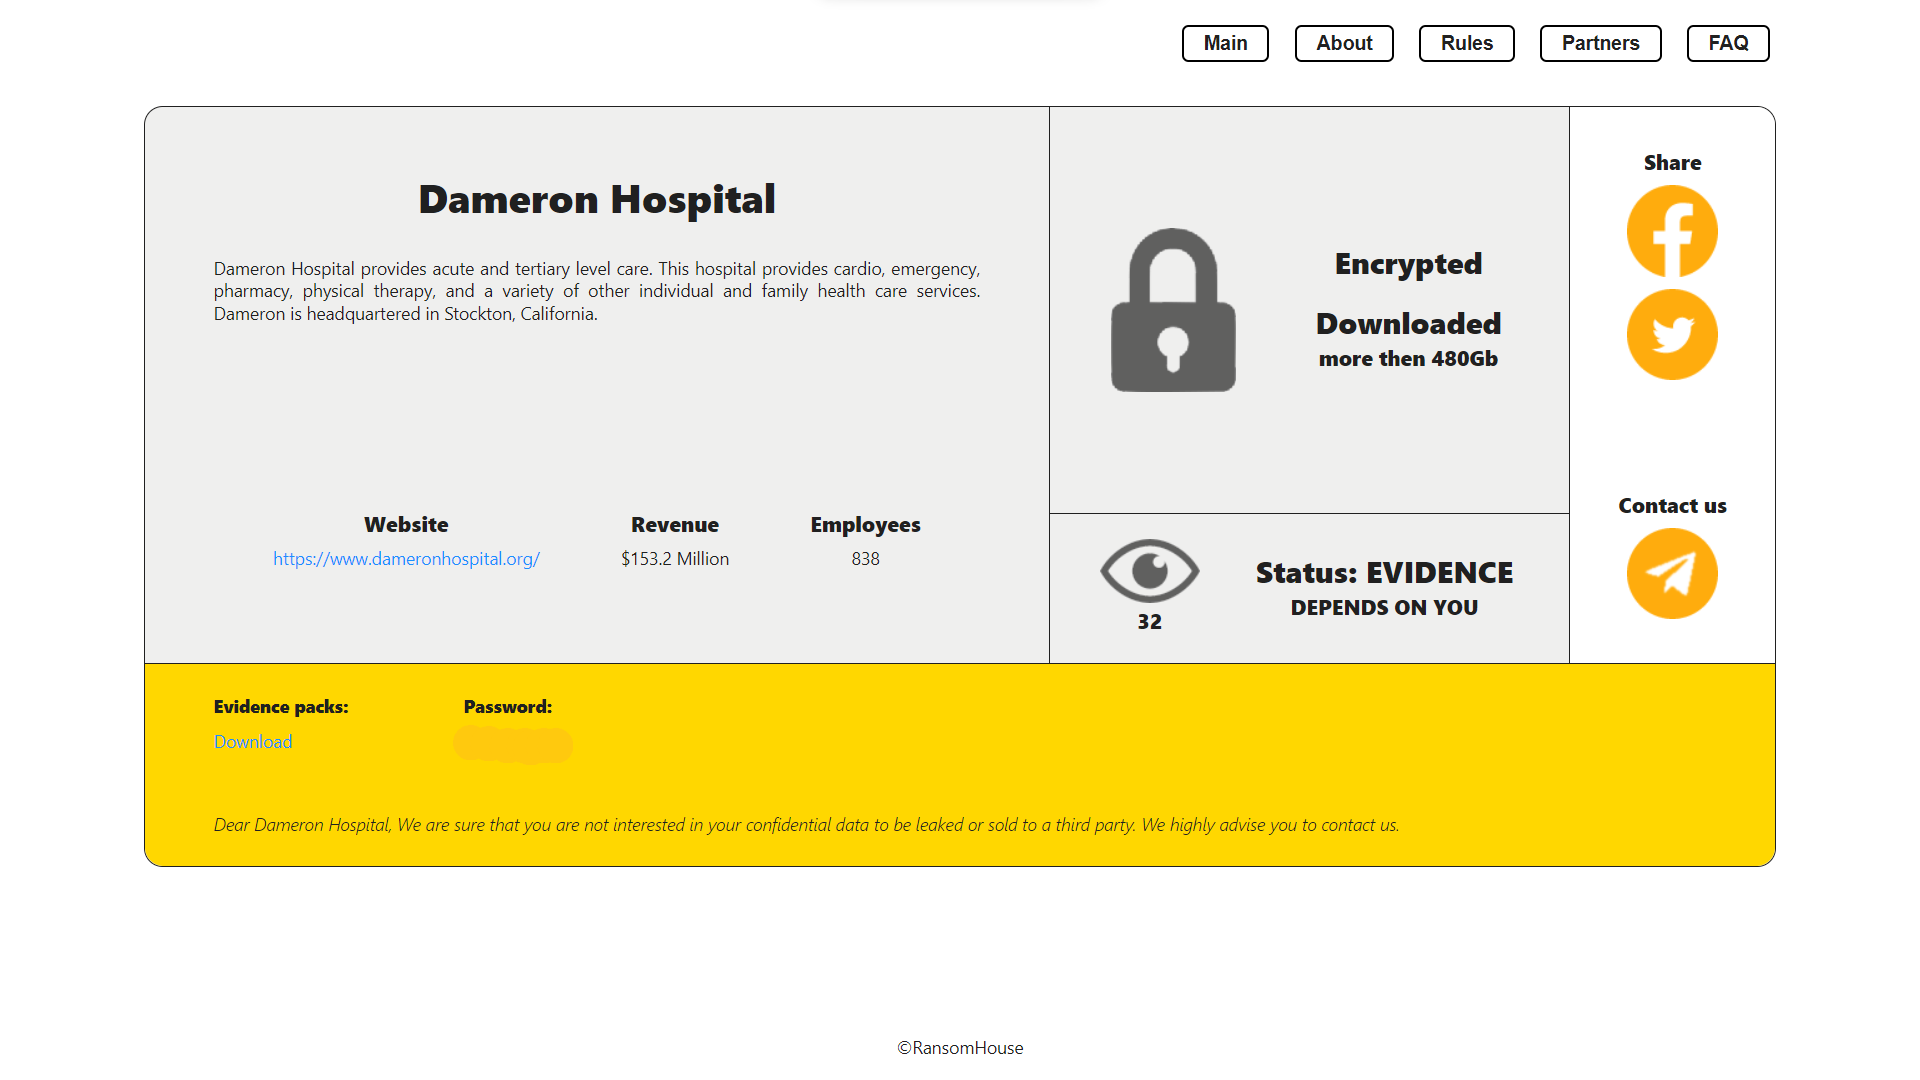 Dameron Hospital